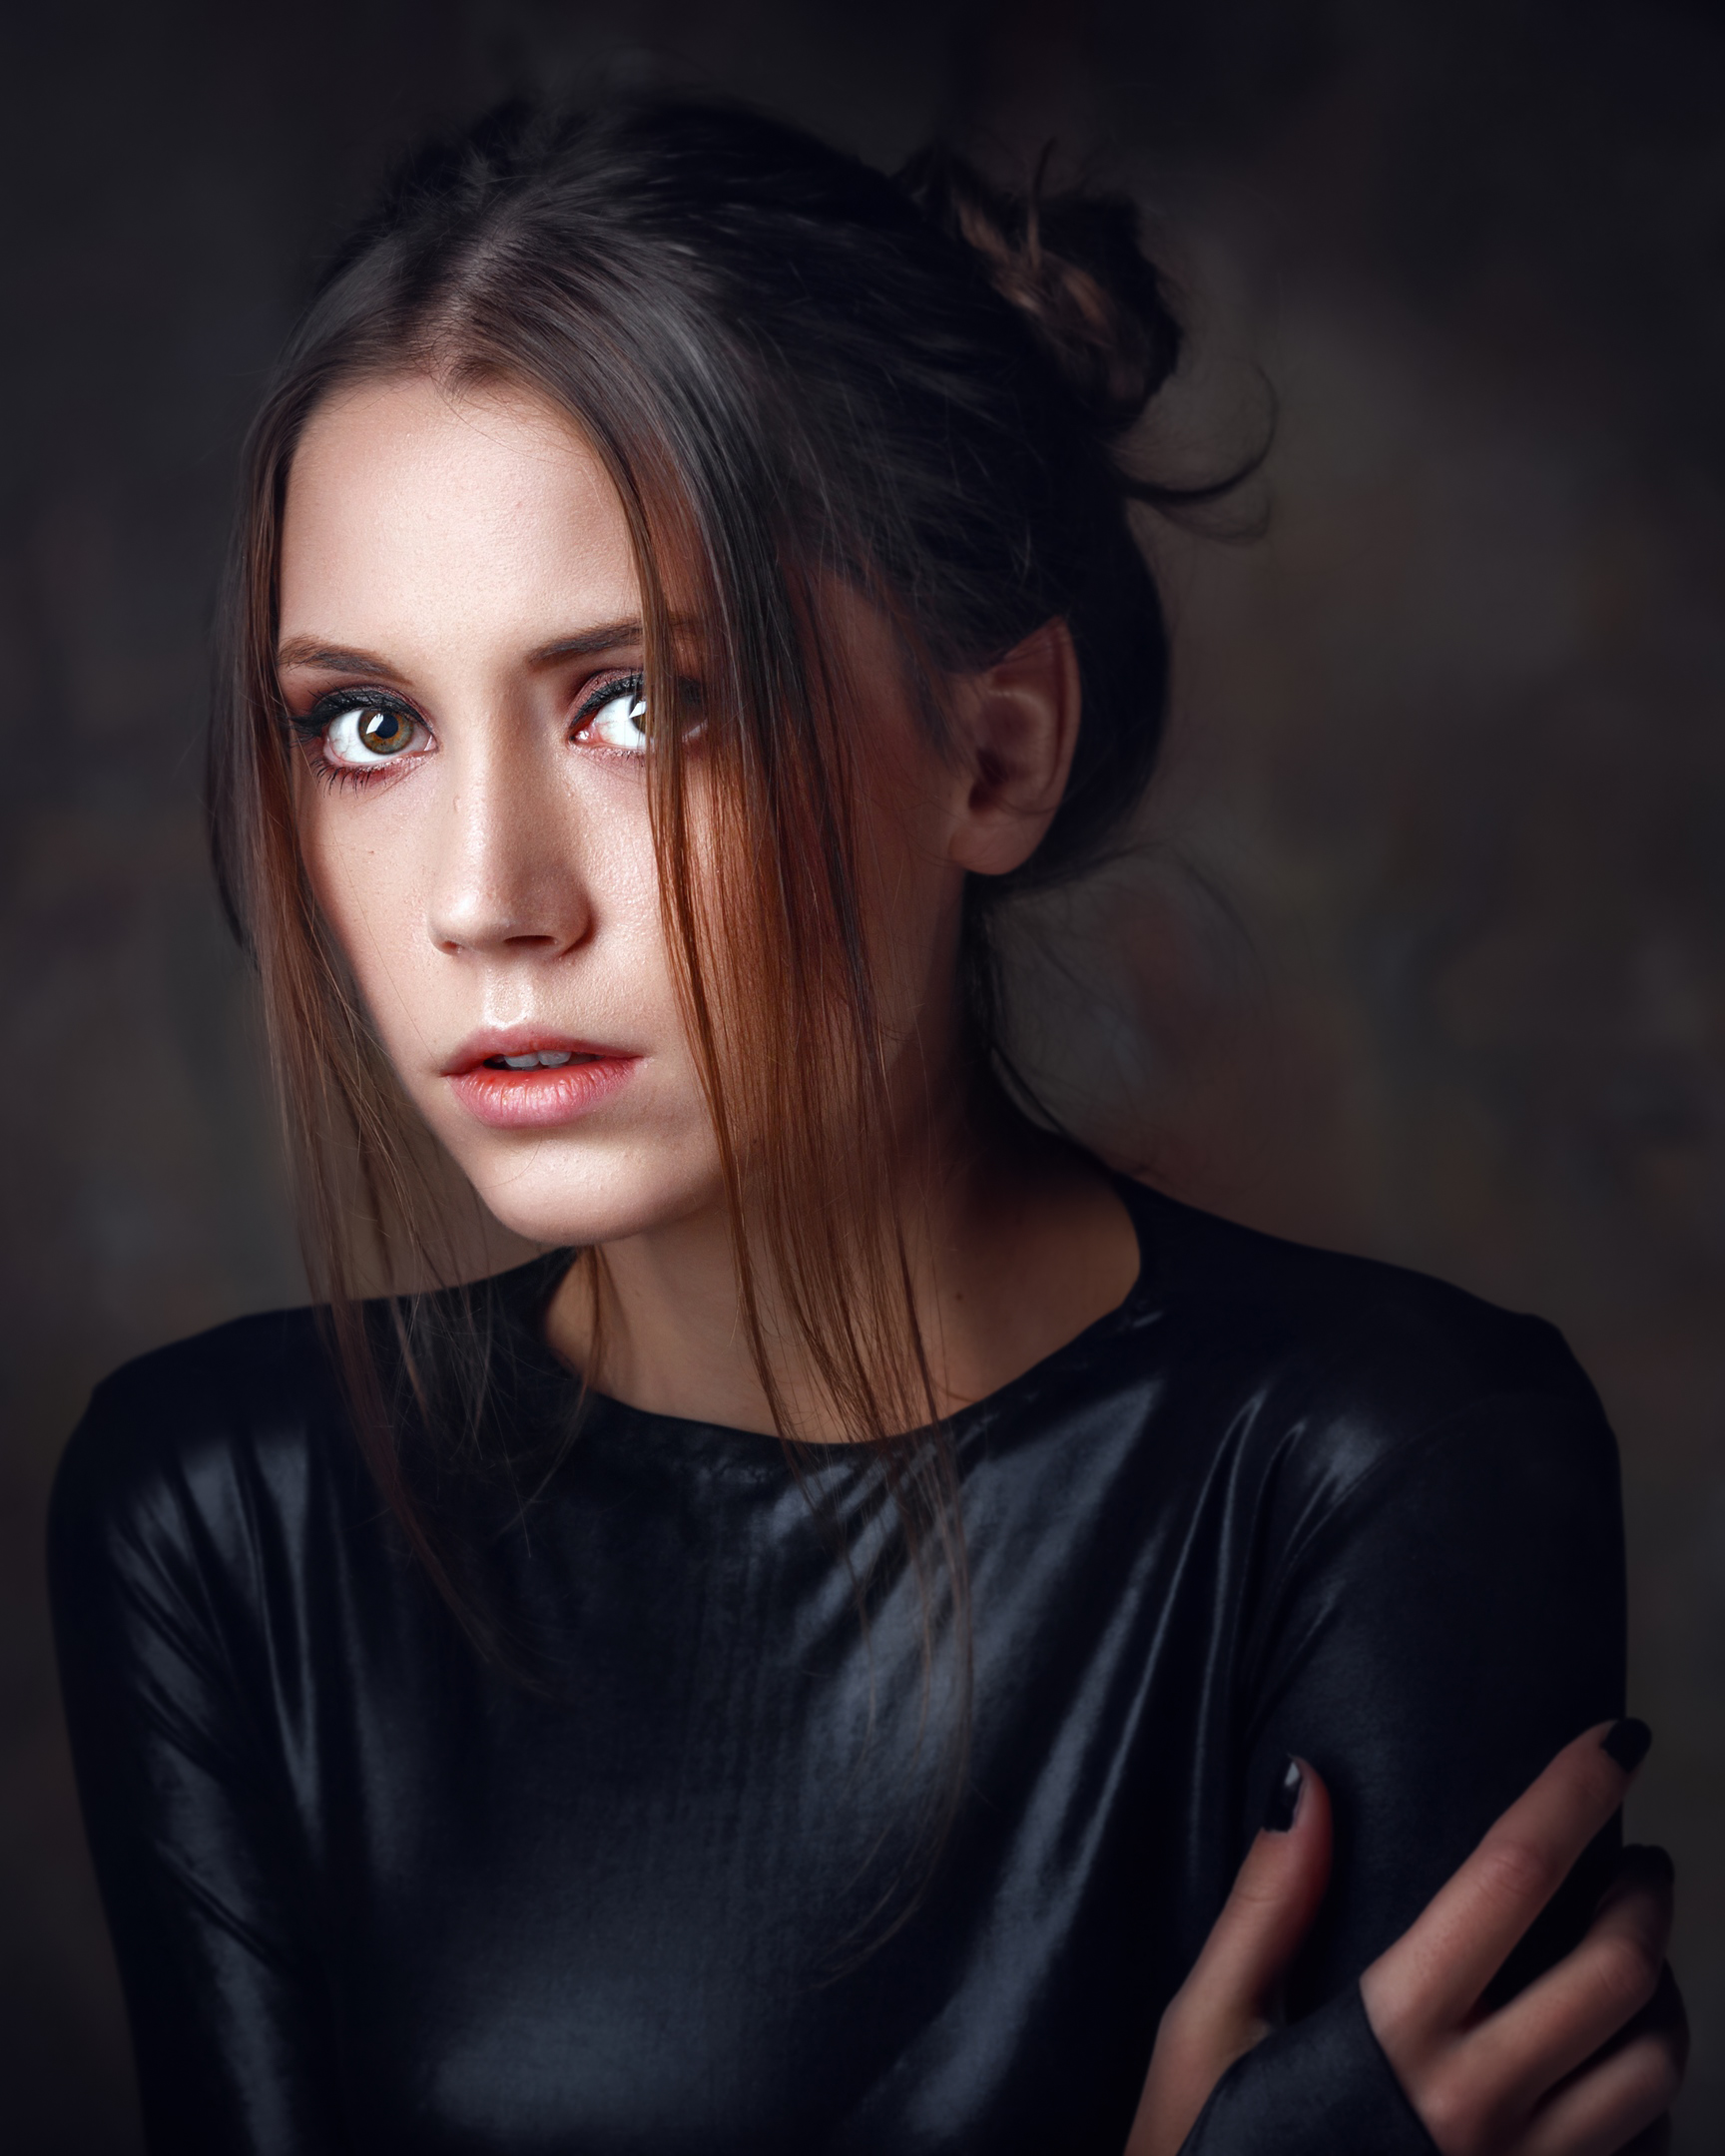 Alexey Kishechkin Women Ksenia Kokoreva Brunette Portrait Black Clothing Makeup Looking At Viewer Si 1728x2160